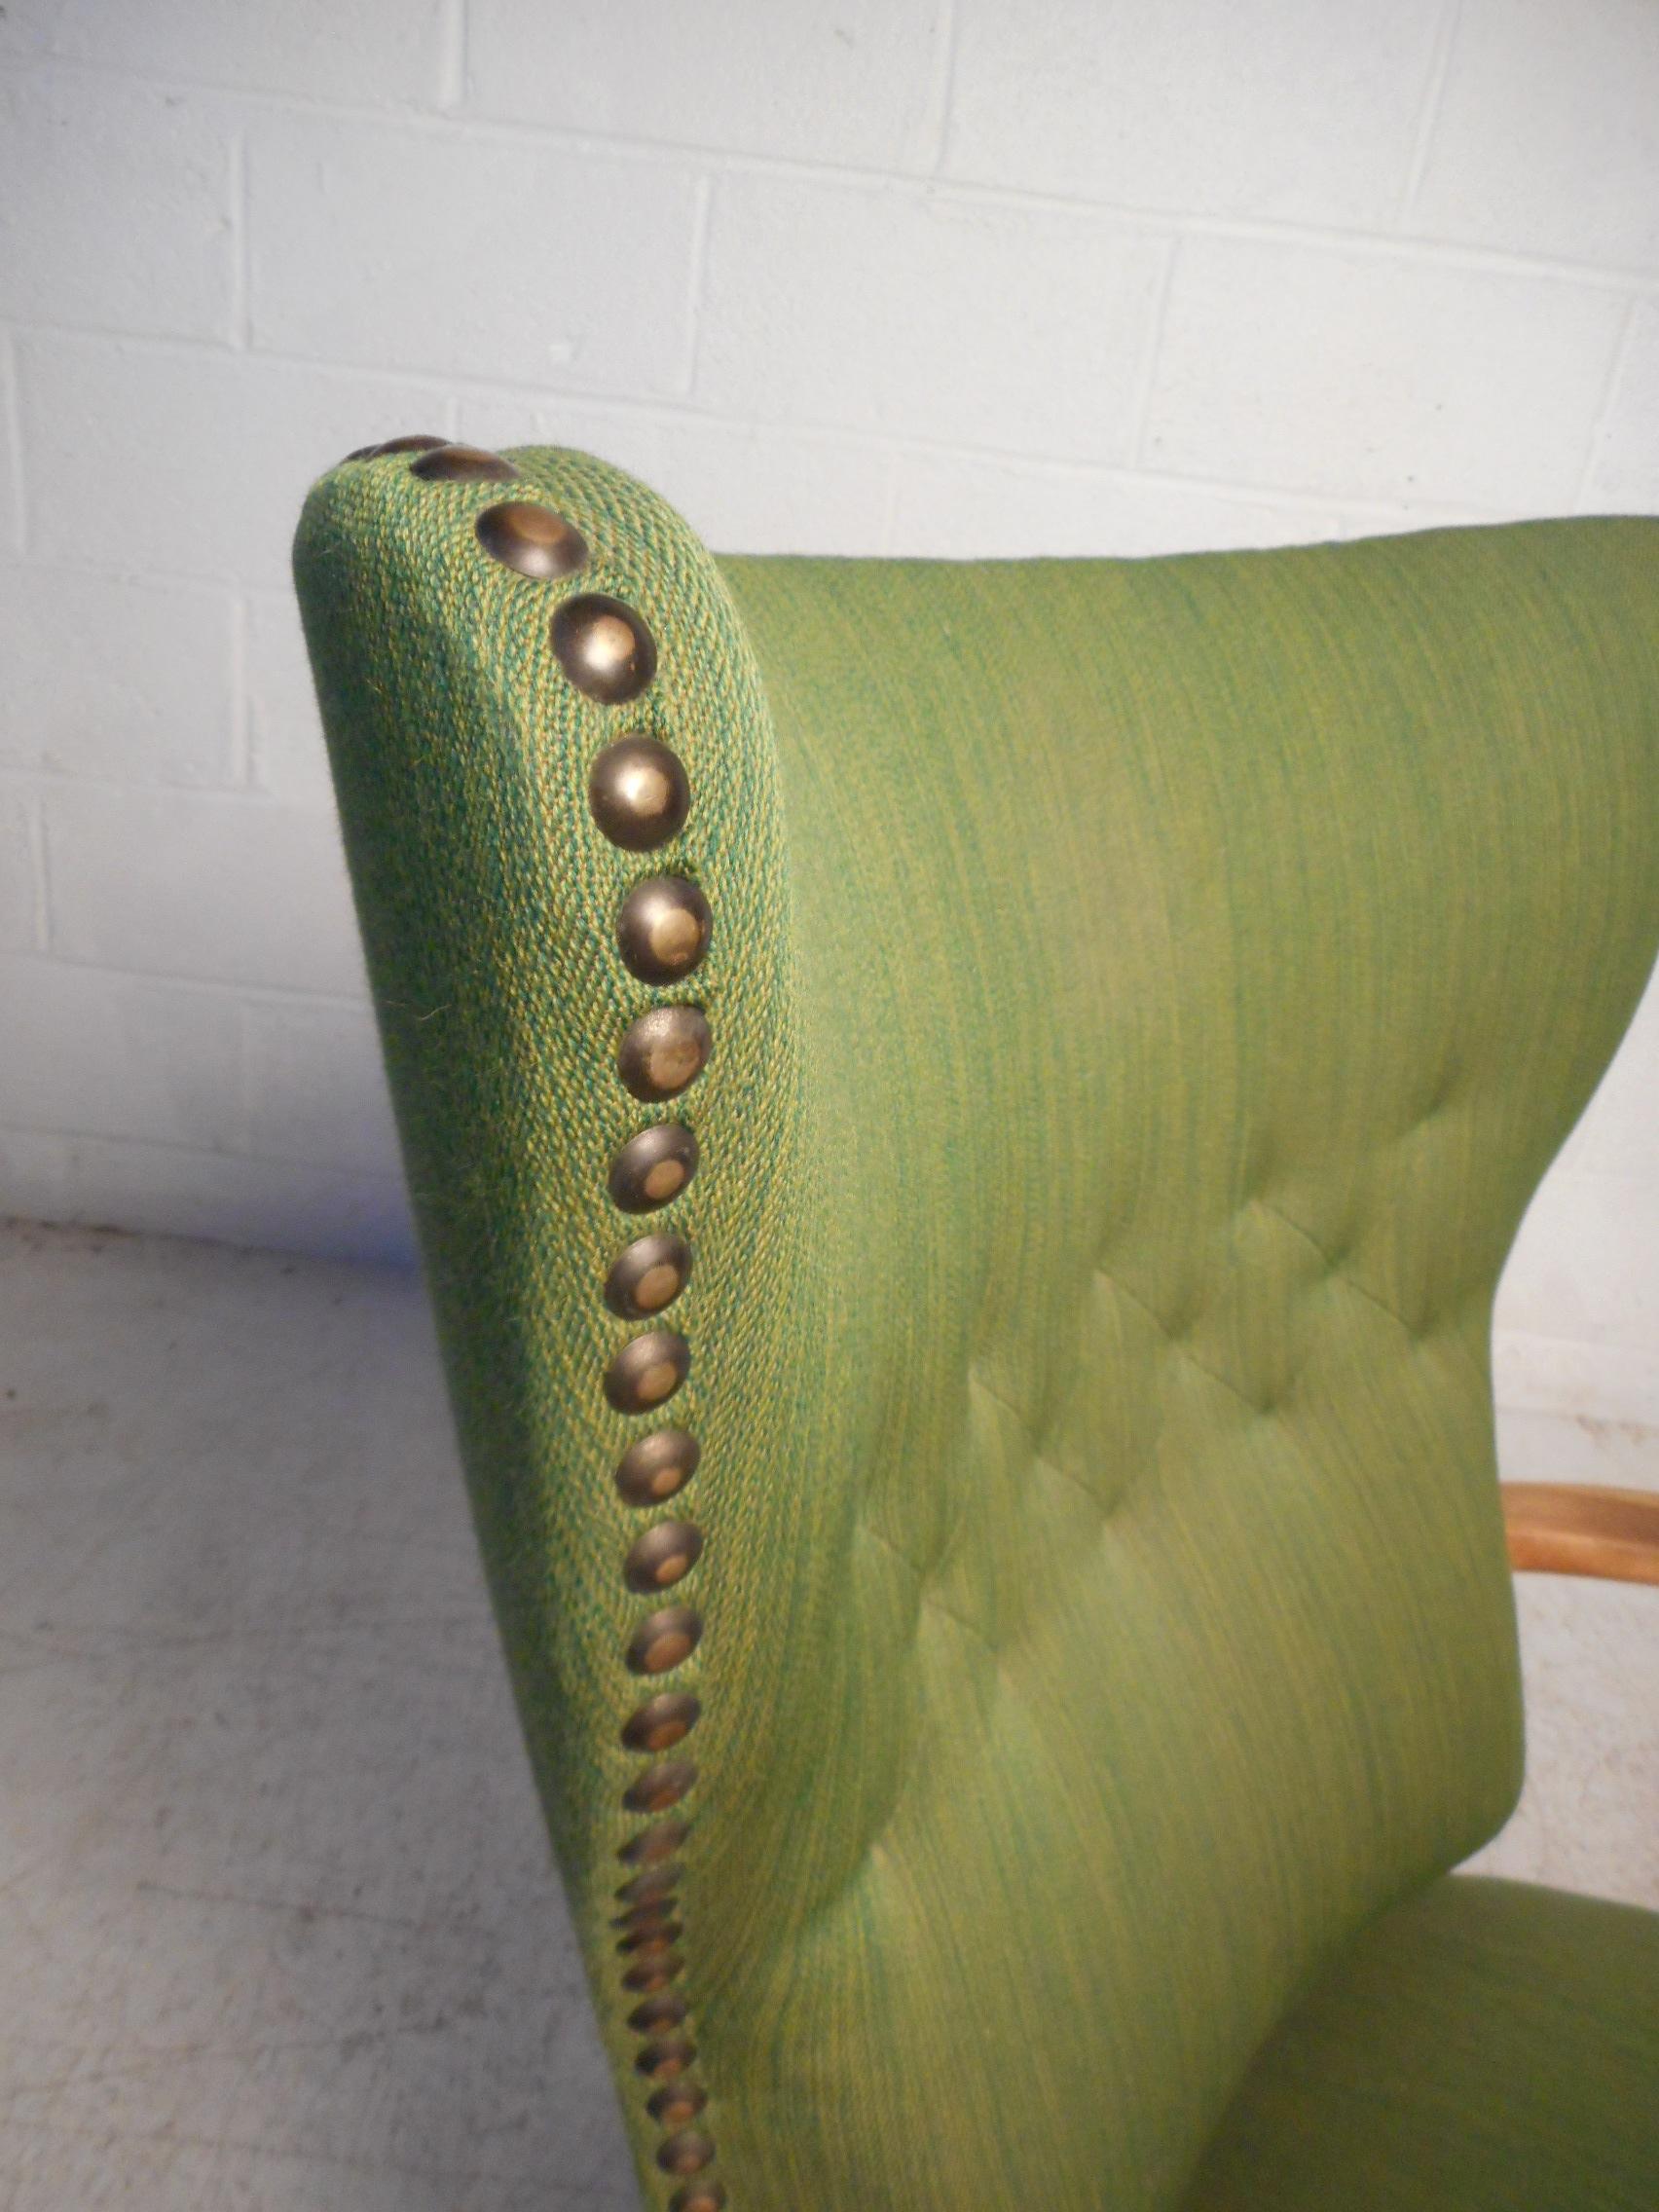 Danish Modern Lounge Chair 1